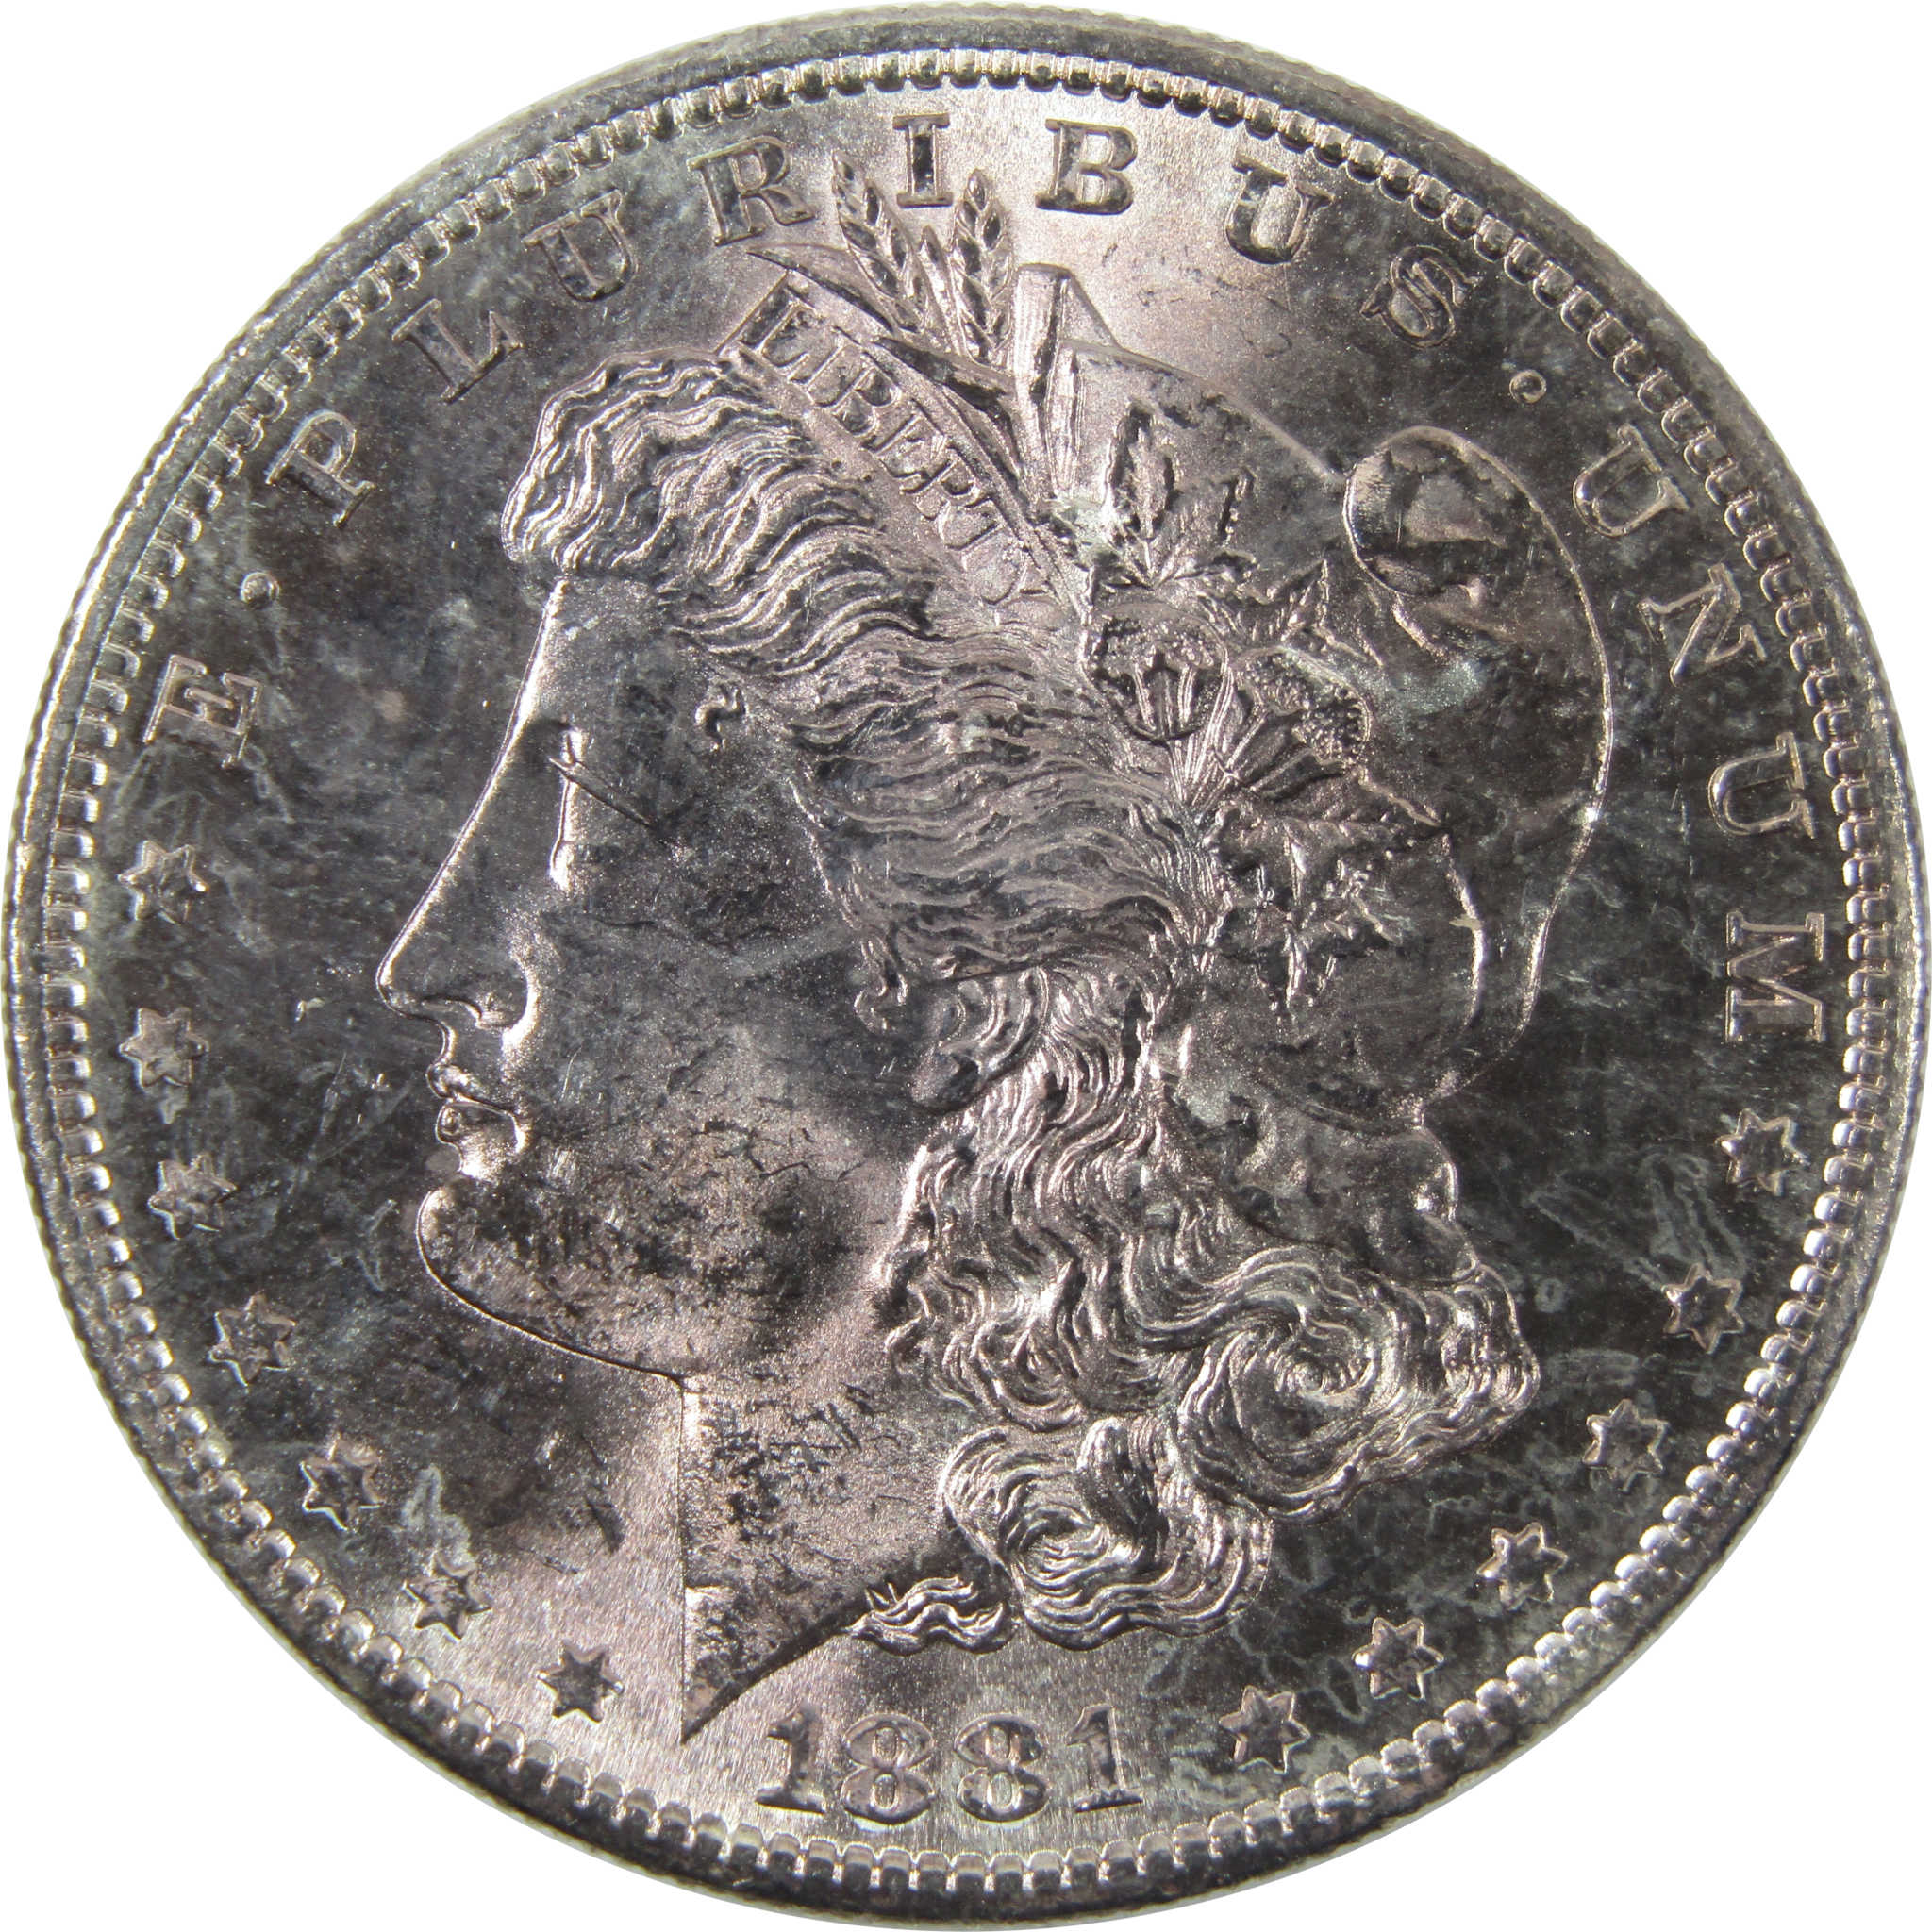 1881 S Morgan Dollar BU Choice Uncirculated 90% Silver SKU:CPC4335 - Morgan coin - Morgan silver dollar - Morgan silver dollar for sale - Profile Coins &amp; Collectibles